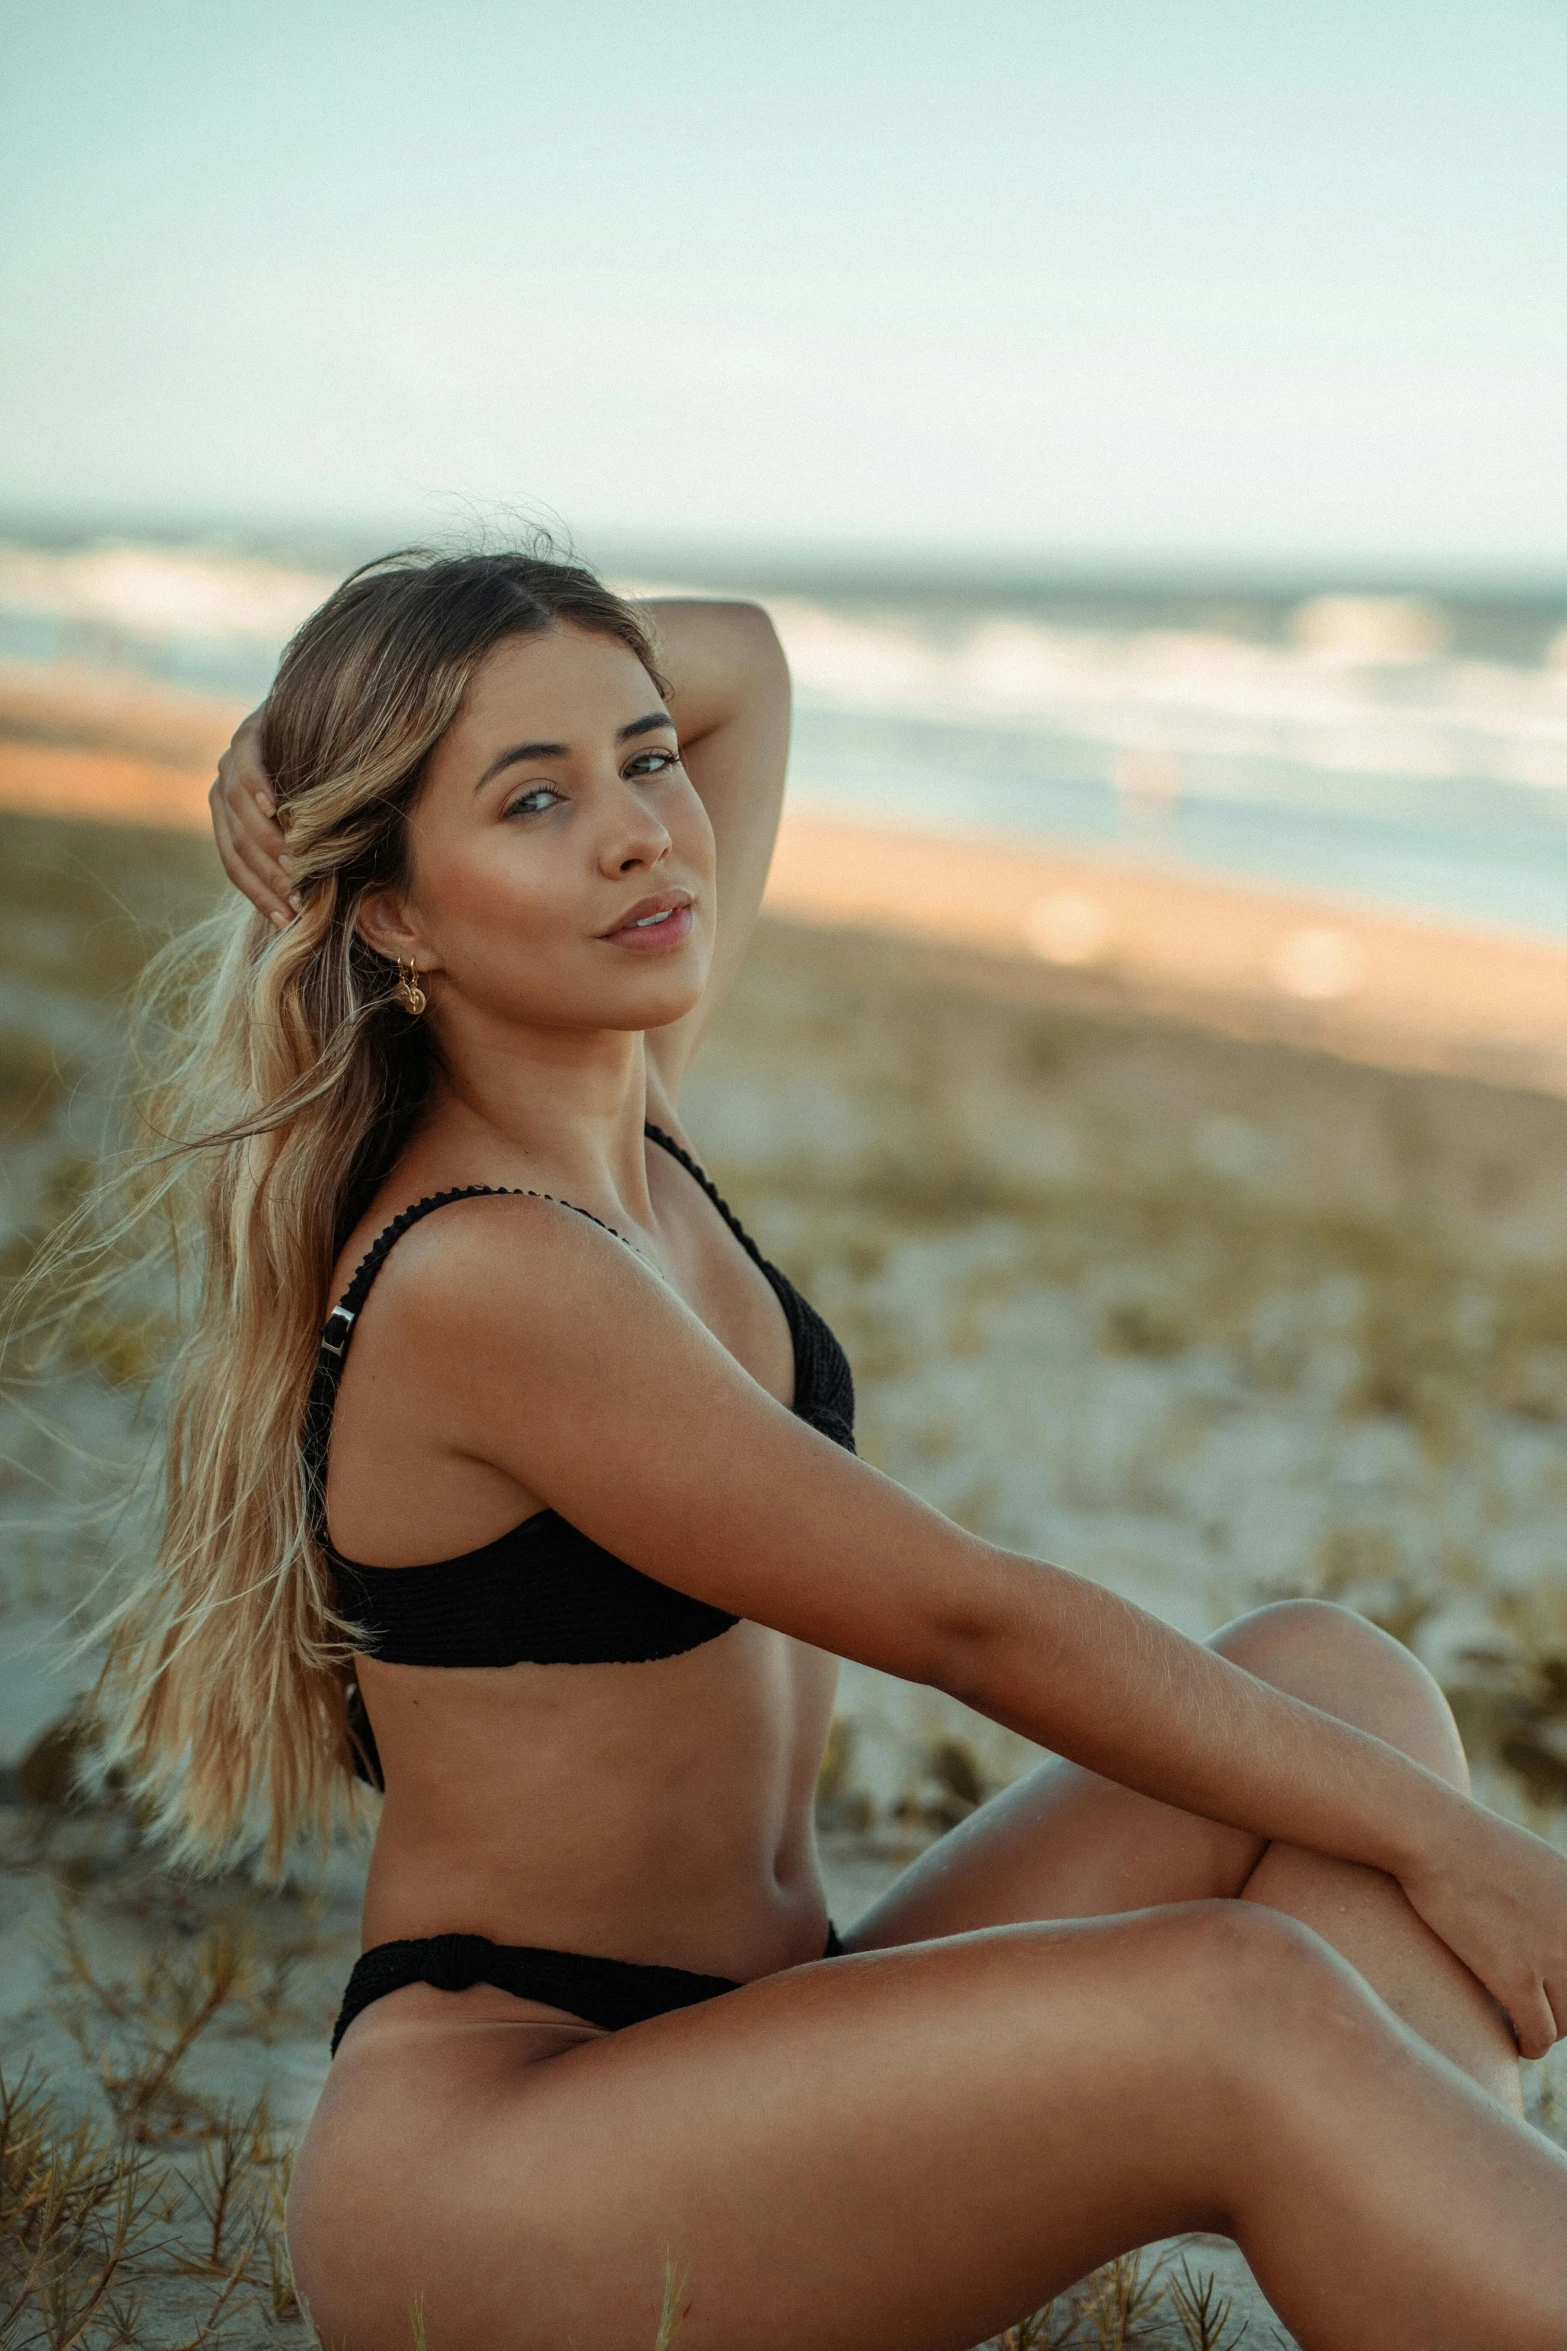 a woman in a black bikini sitting on the beach